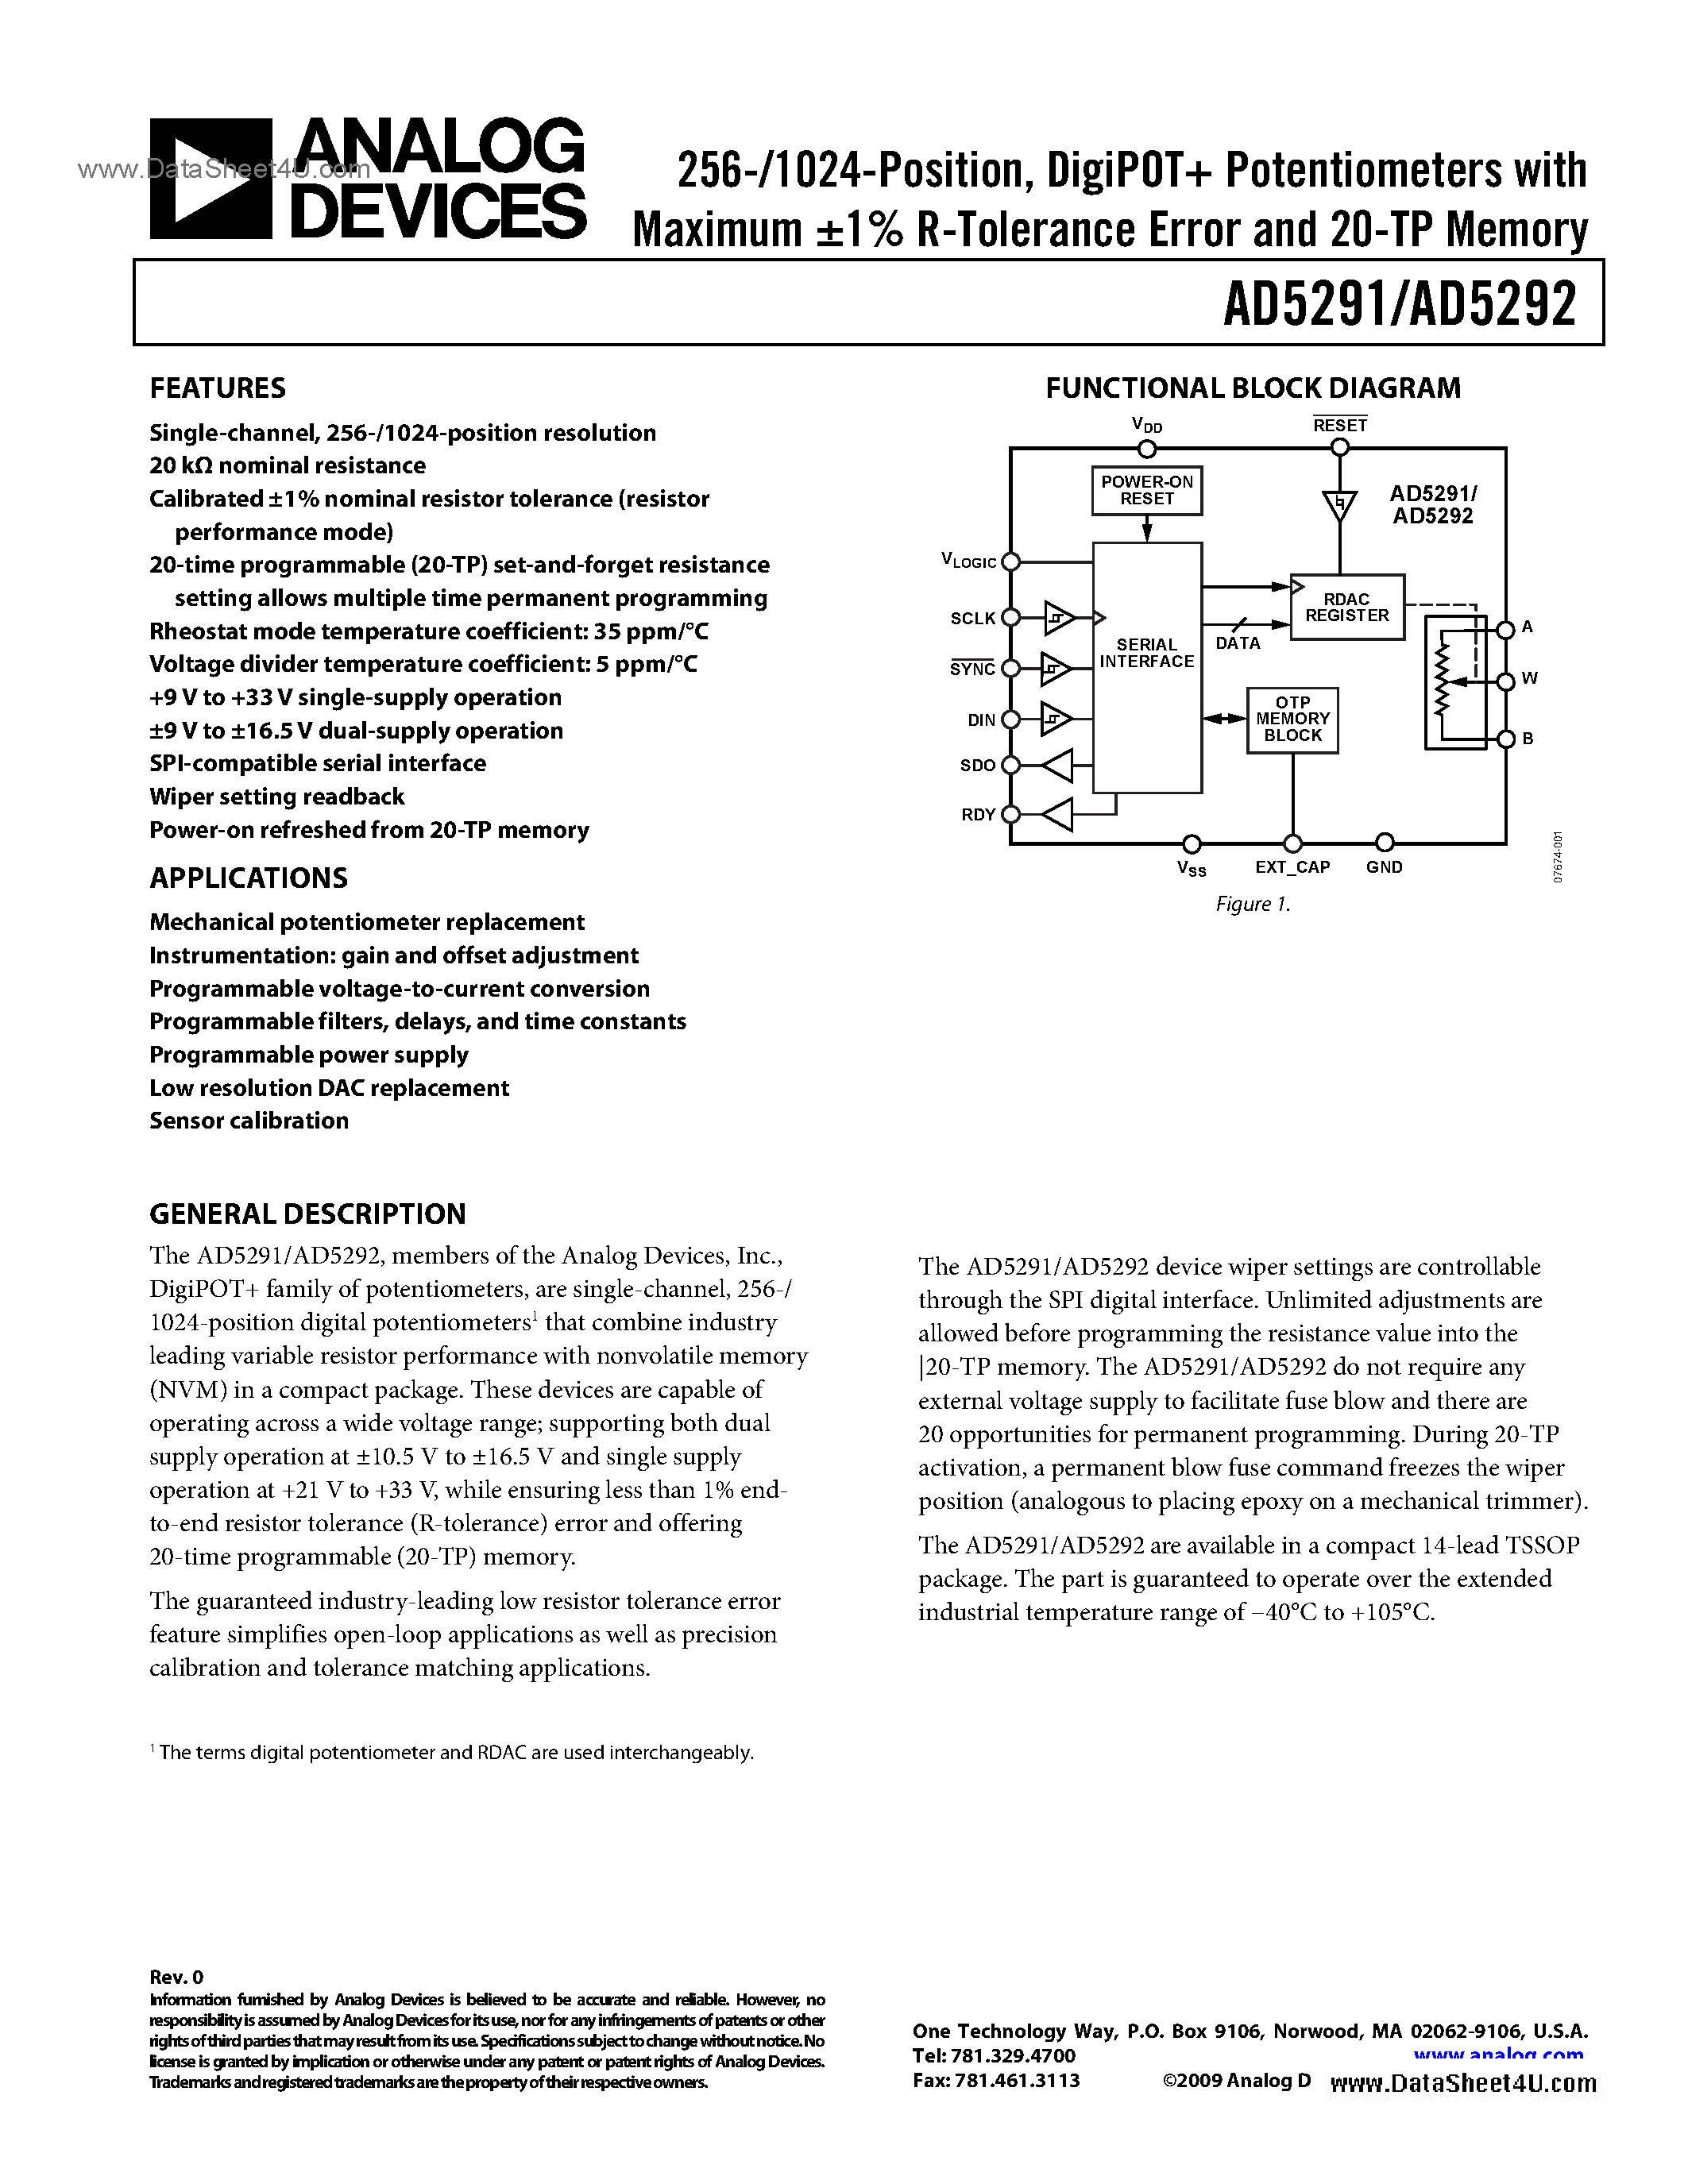 Datasheet AD5291 - (AD5291 / AD5292) Digital Potentiometer page 1